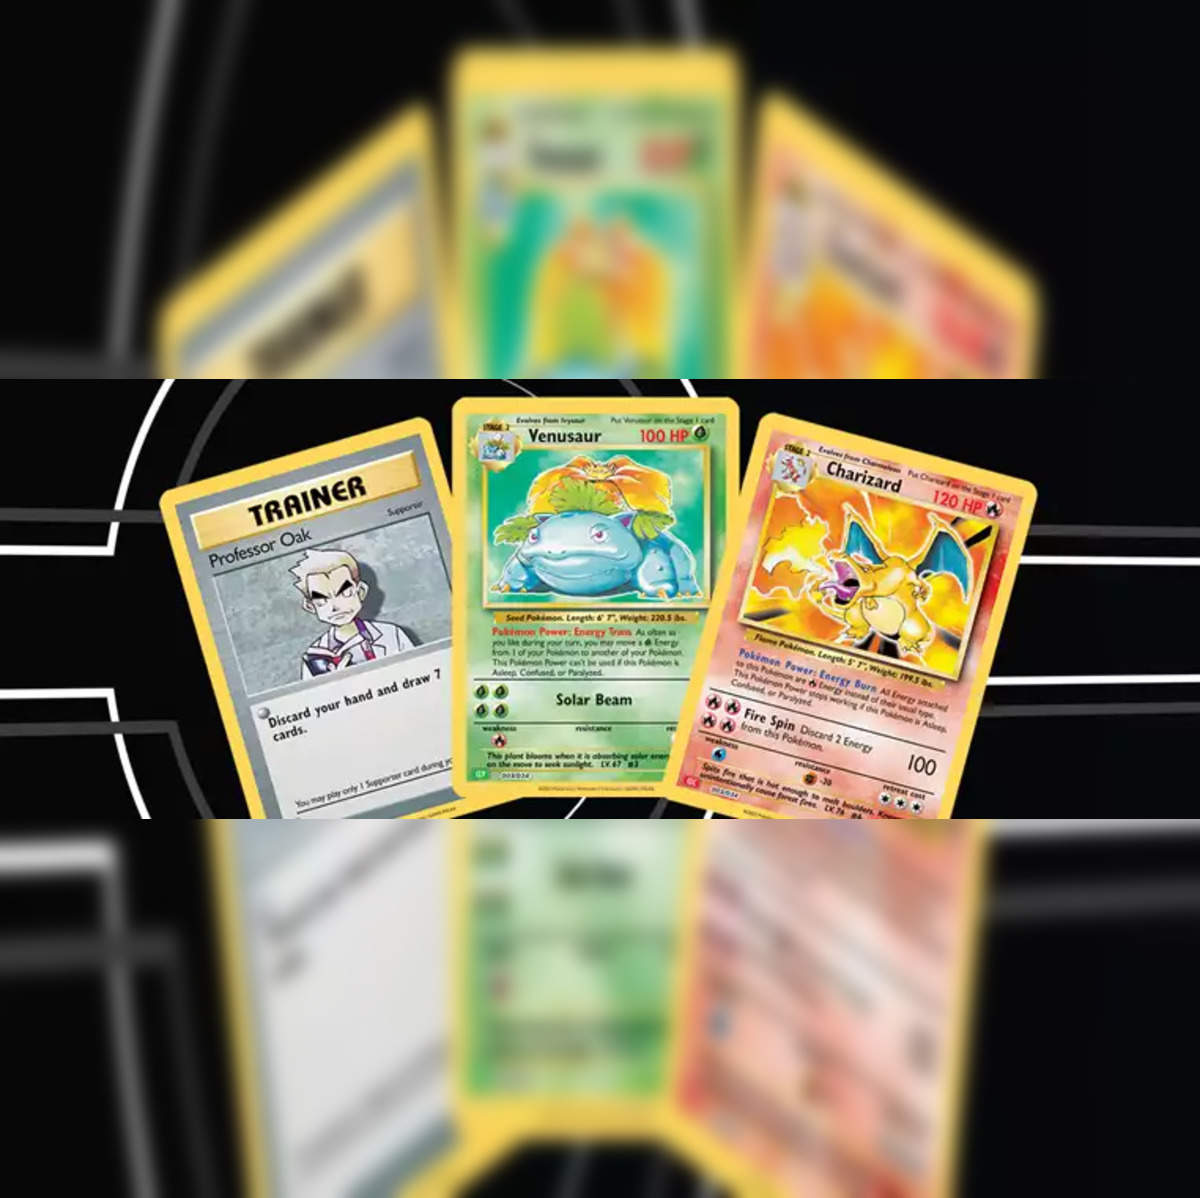 Charizard Pokémon Card Game Classic: Charizard & Ho-Oh ex Deck, Pokémon